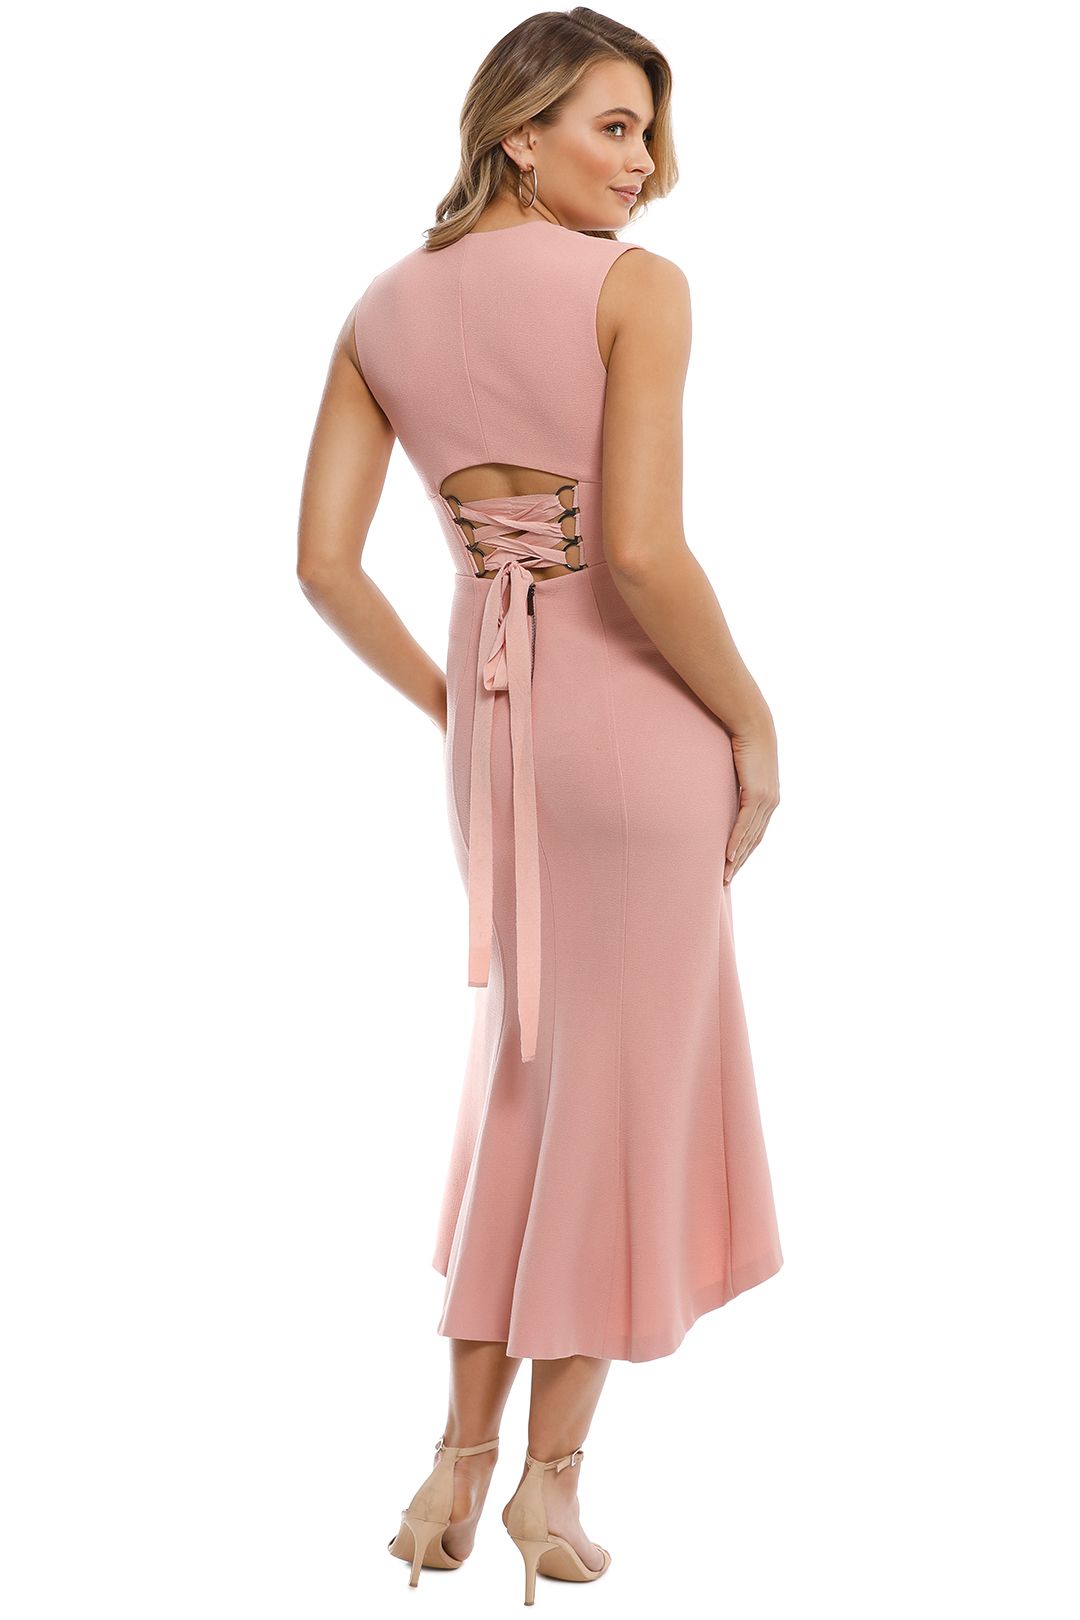 Rebecca Vallance -  Ravena Dress Lace Up Back - Blush Pink - Back